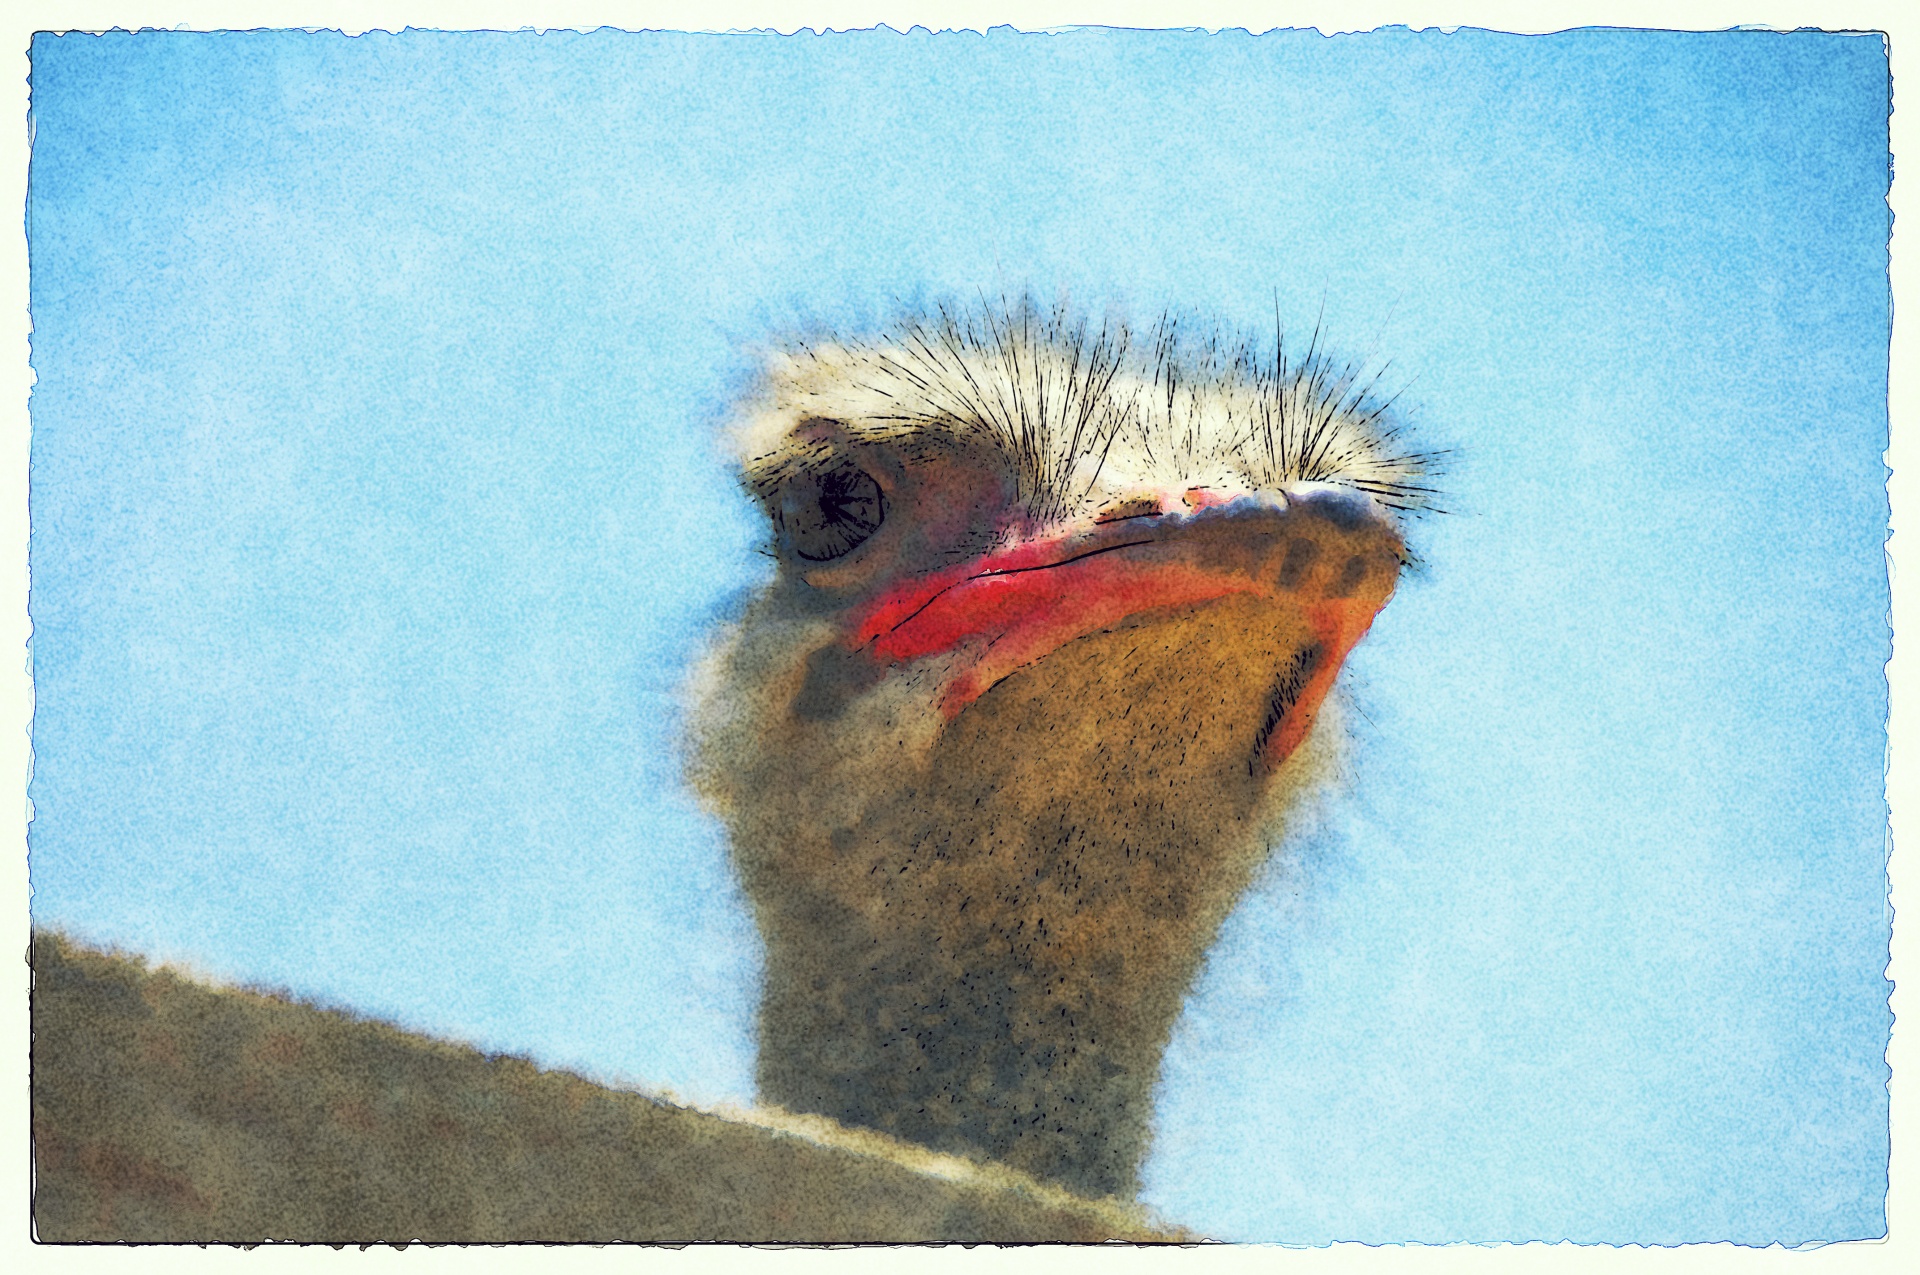 artistic view of an ostrich face